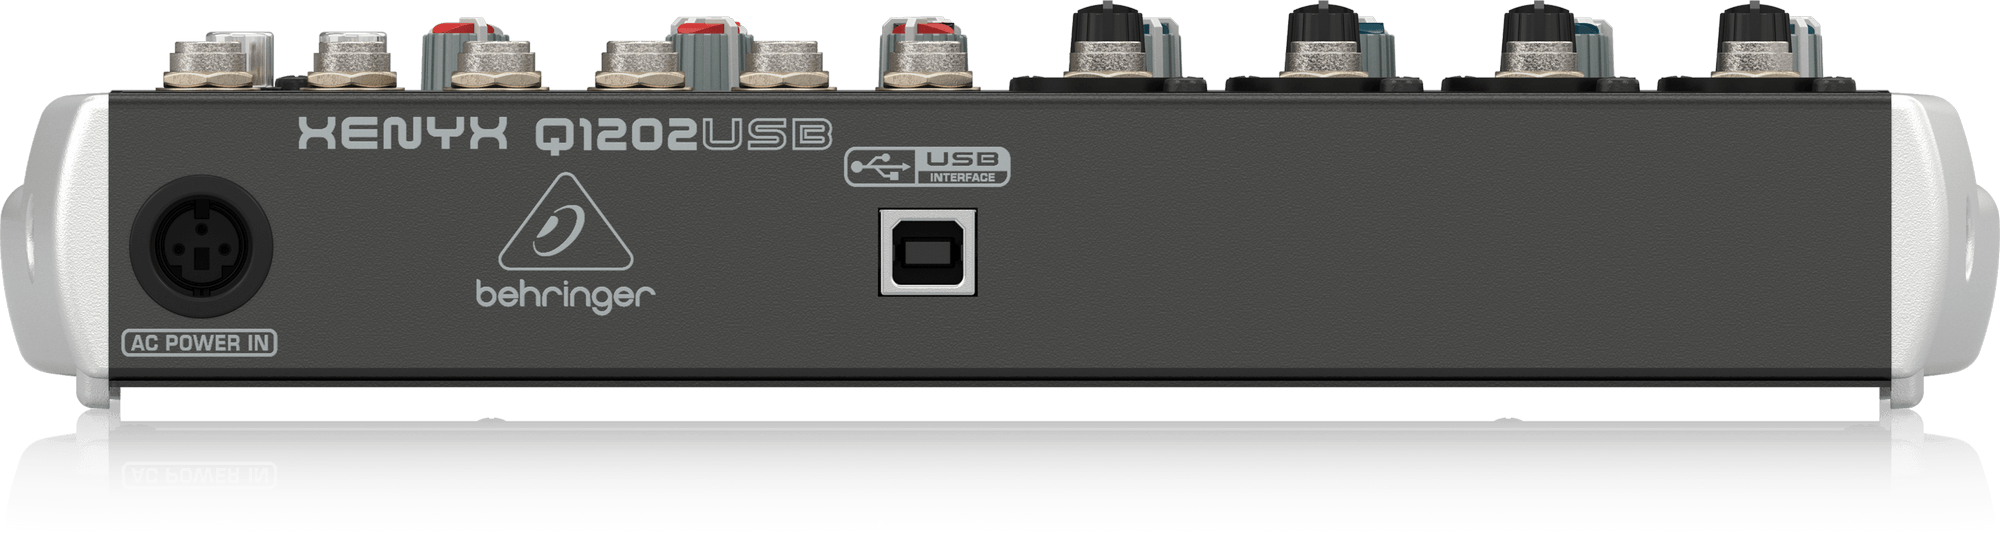 Behringer Xenyx Q1202USB Mixer with USB (Xenyx-Q1202USB) | BEHRINGER , Zoso Music